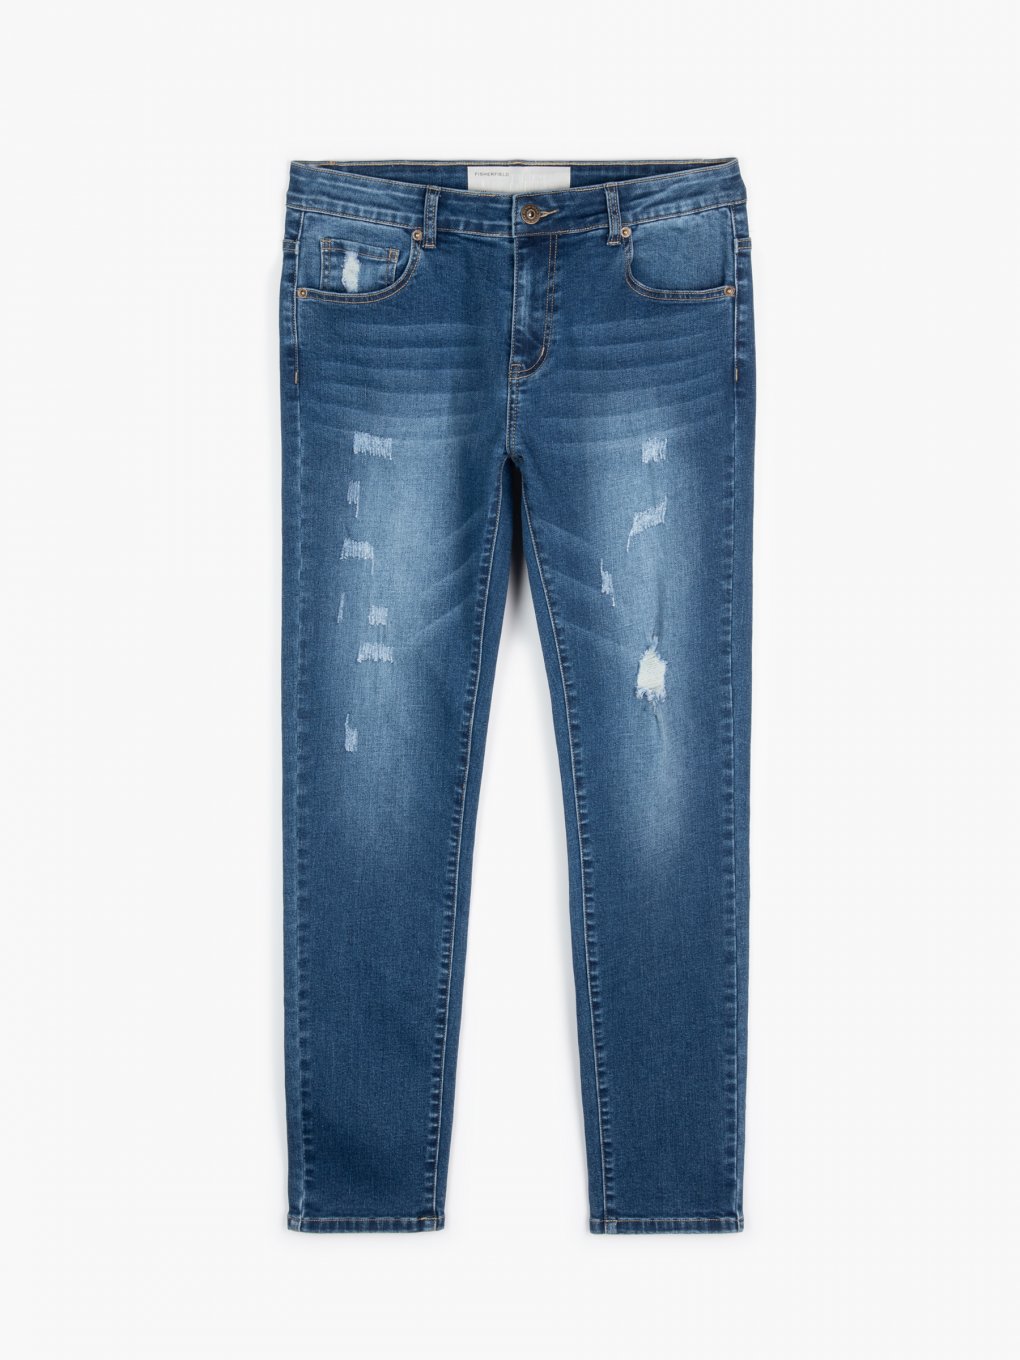 Damaged slim fit jeans